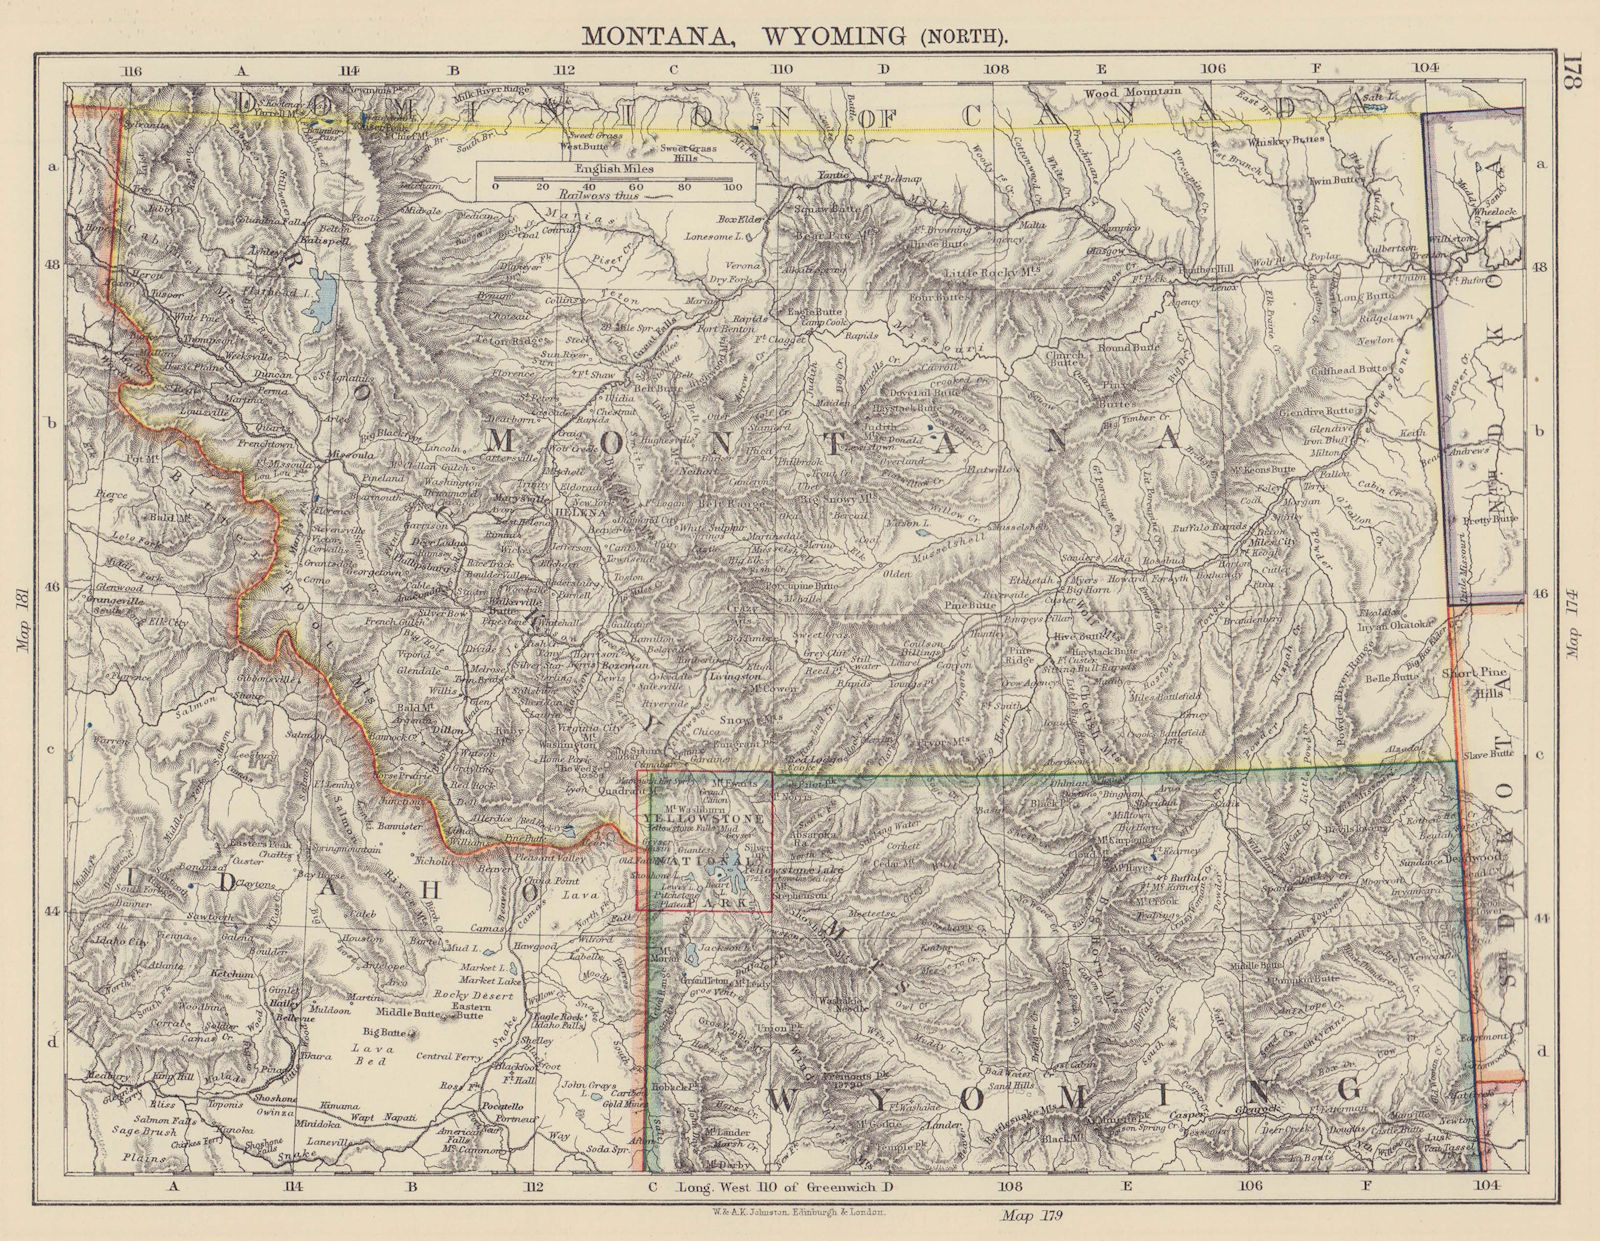 USA MOUNTAIN STATES. Montana North Wyoming Idaho East Yellowstone 1901 old map